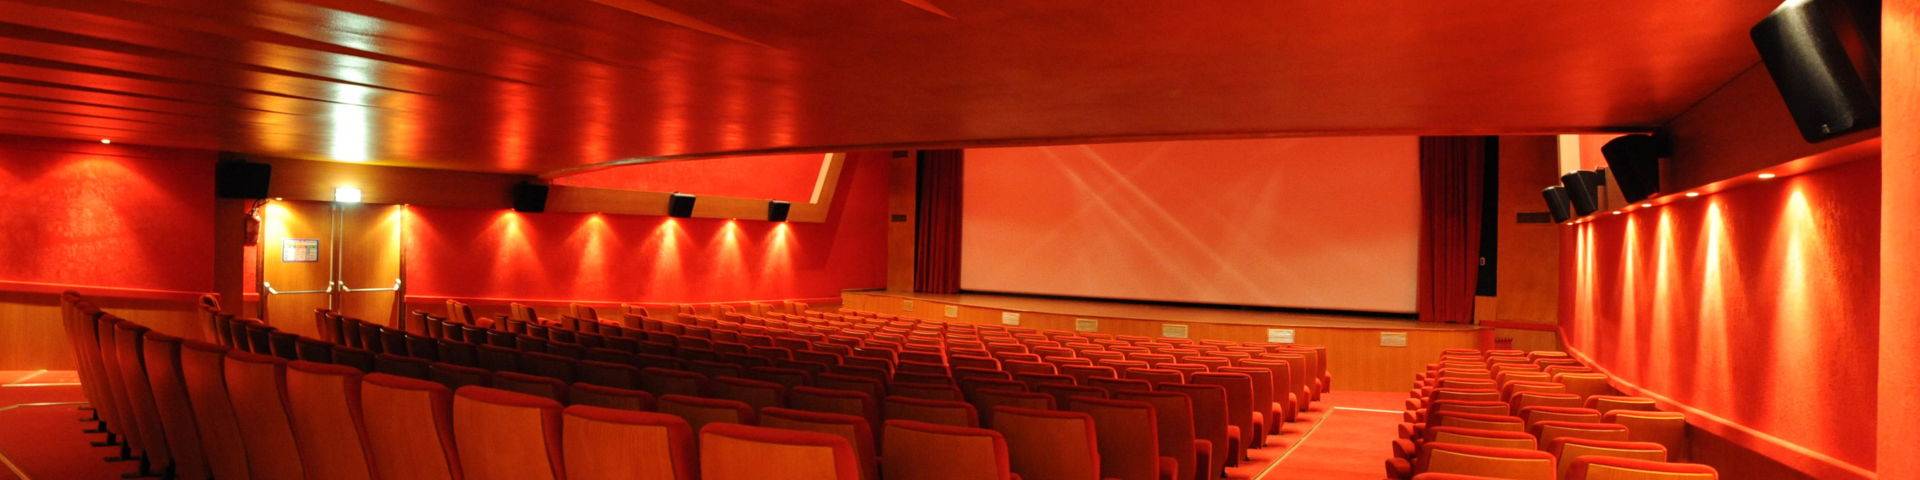 Cinéma Tréport casino JOA